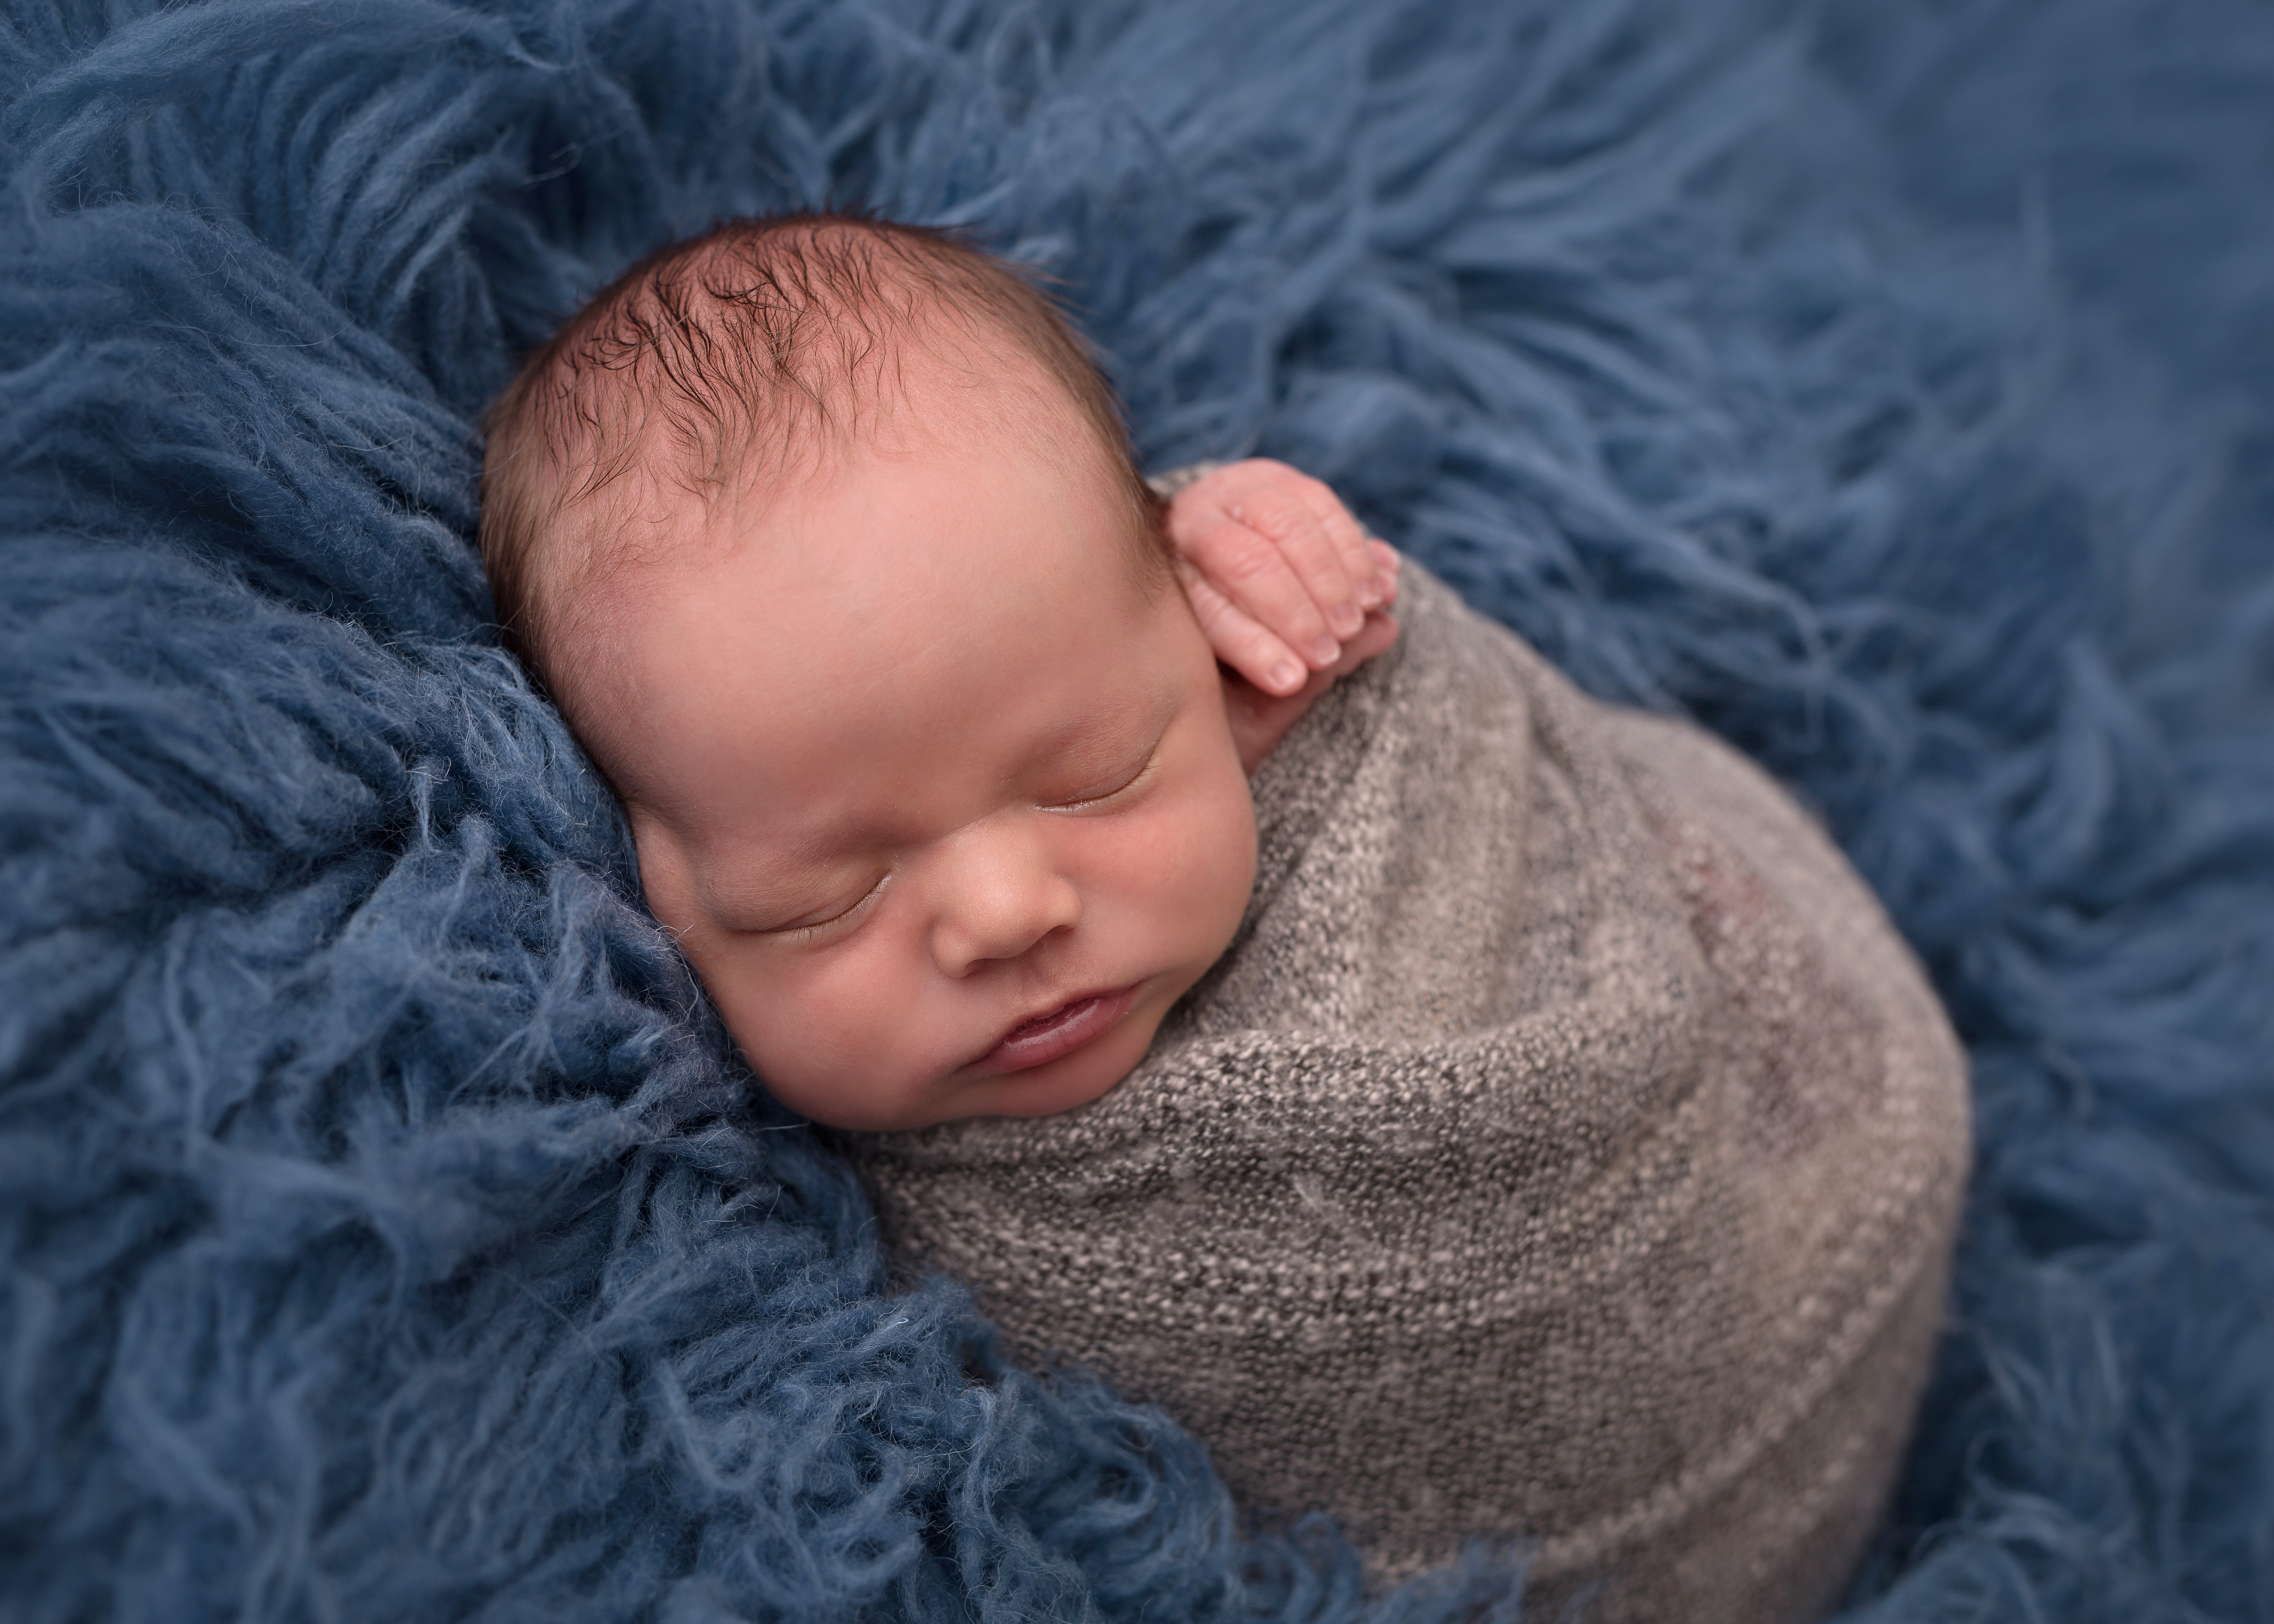 Newborn portrait of baby boy by Toronto newborn photographer Annya Miller 